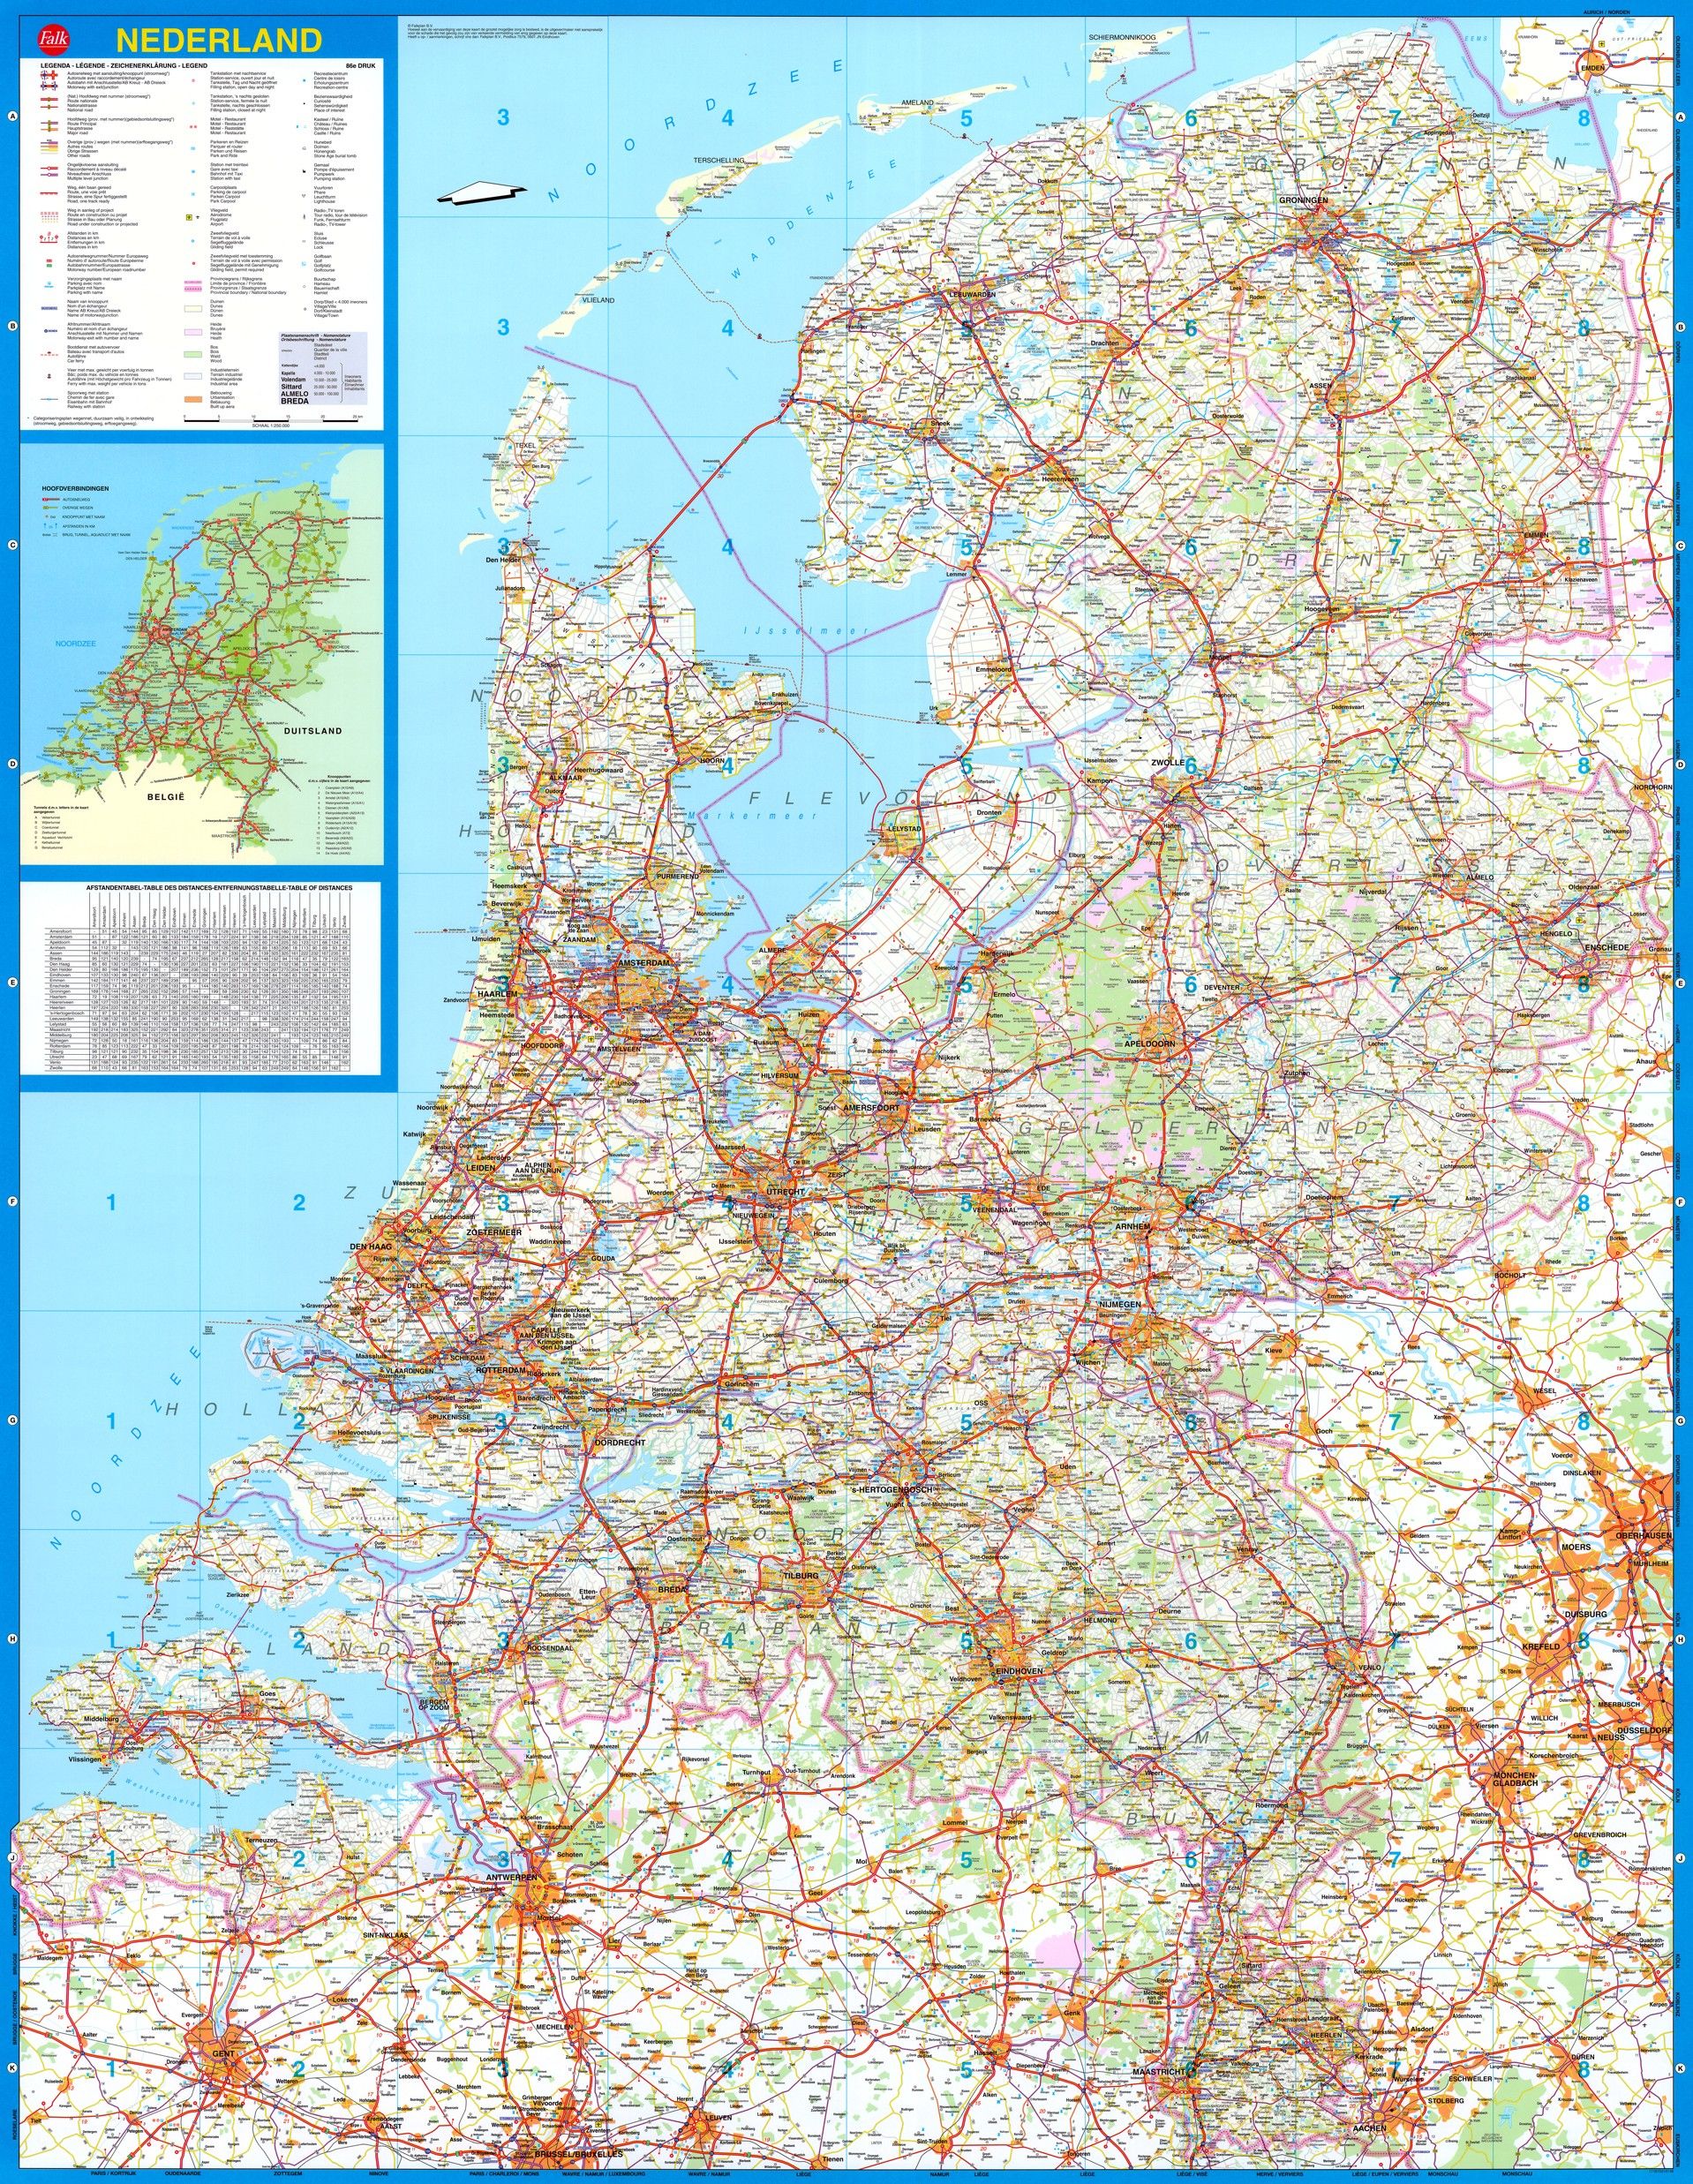 Landkaart Nederland Falk 1:250.000 met plaatsnamenindex